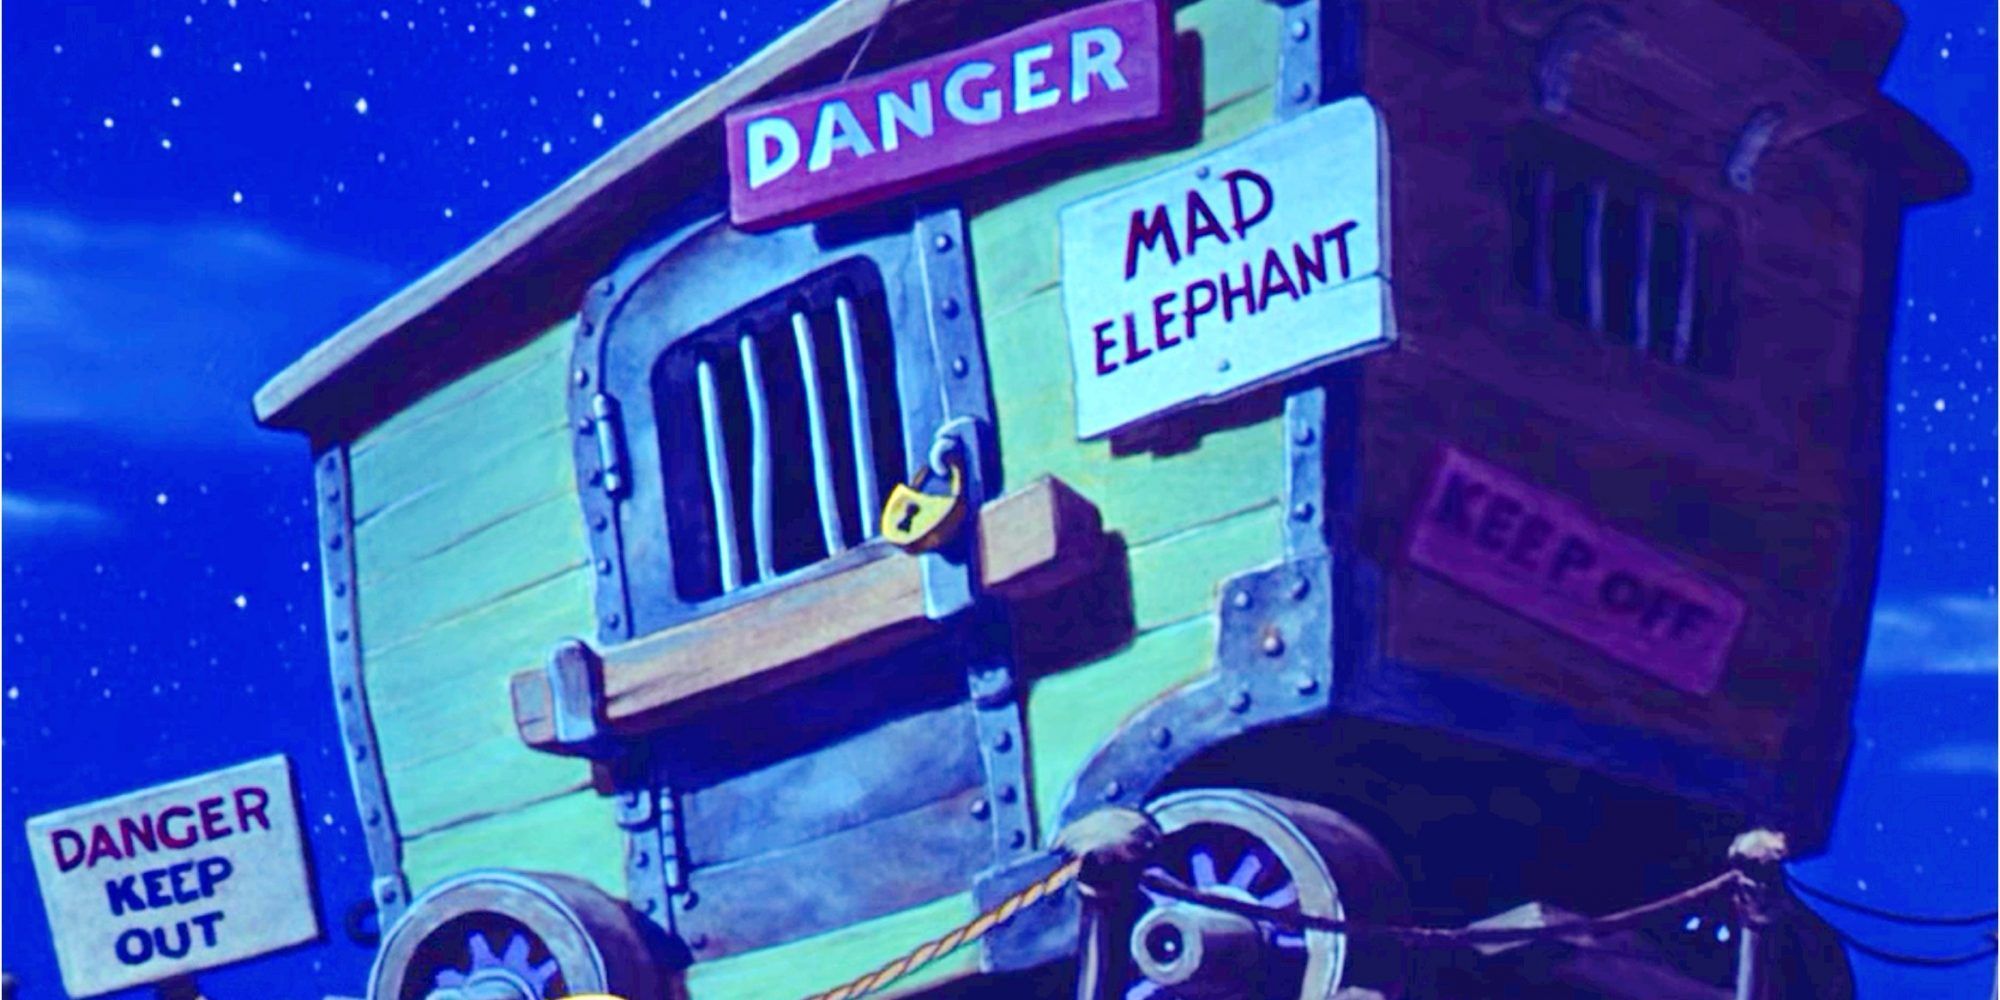 Mrs Jumbo Dumbo Cage Mad Elephant